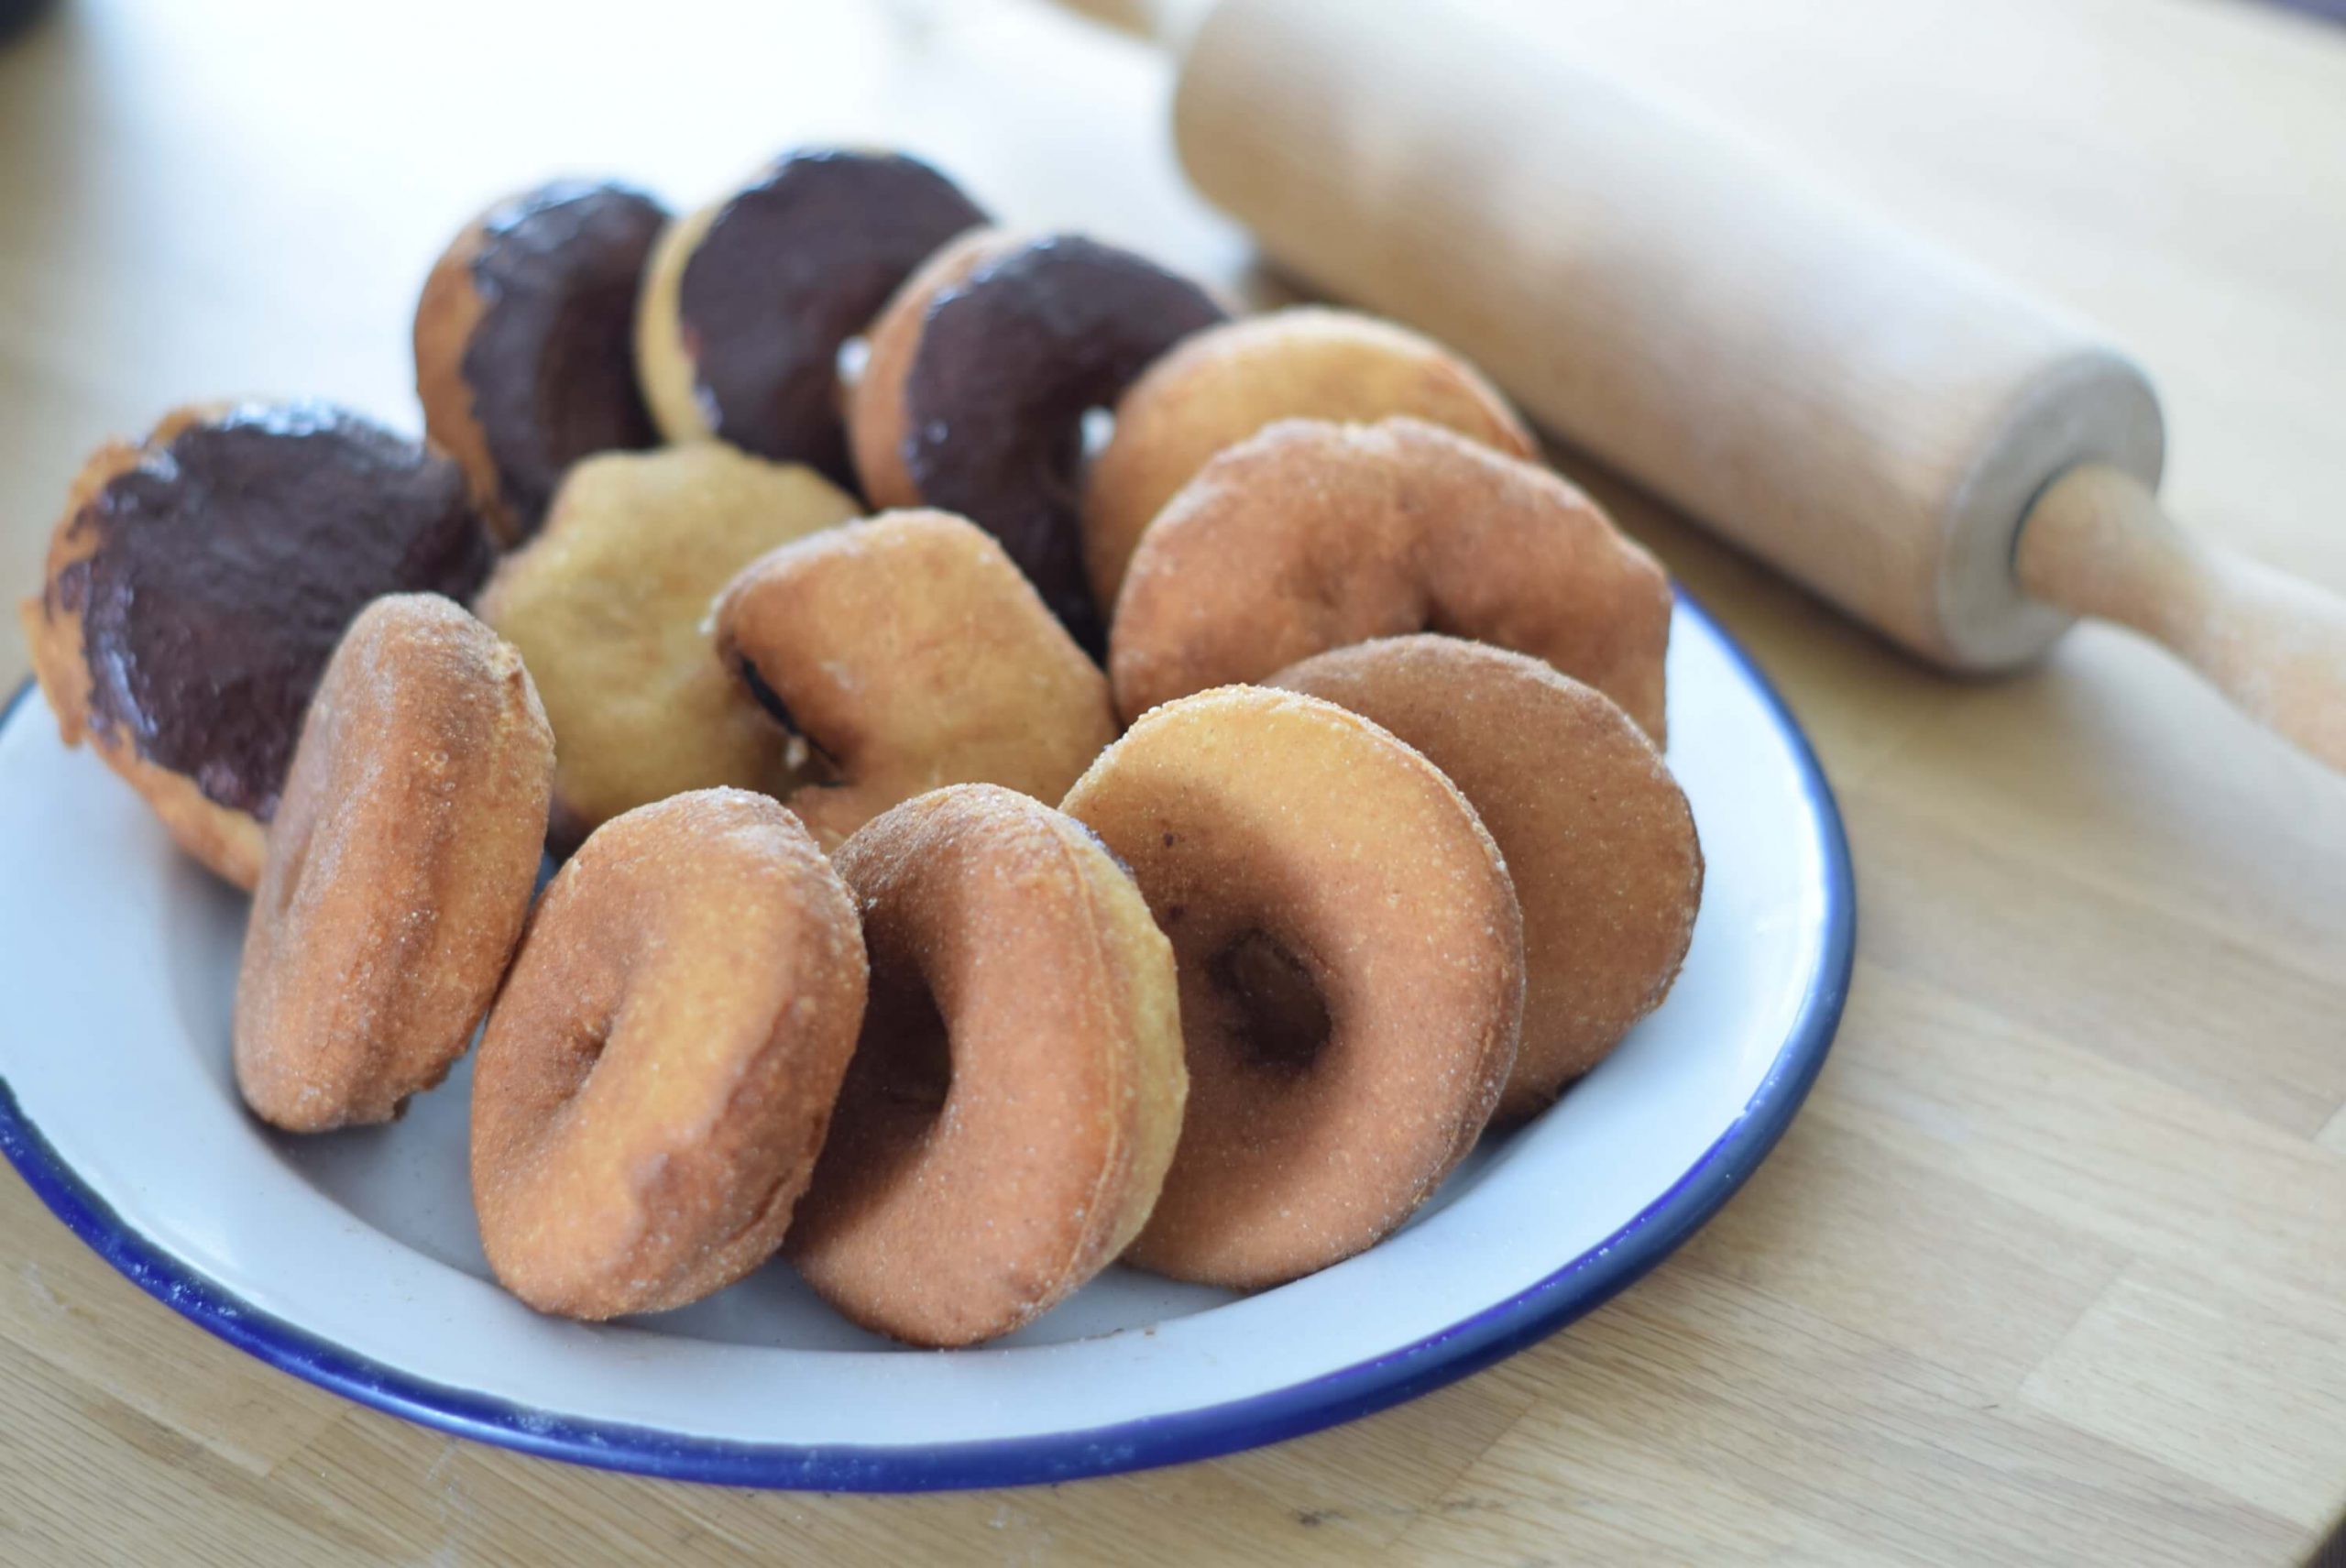 Freshly baked sourdough doughnuts on an enamel plate with a blue rim